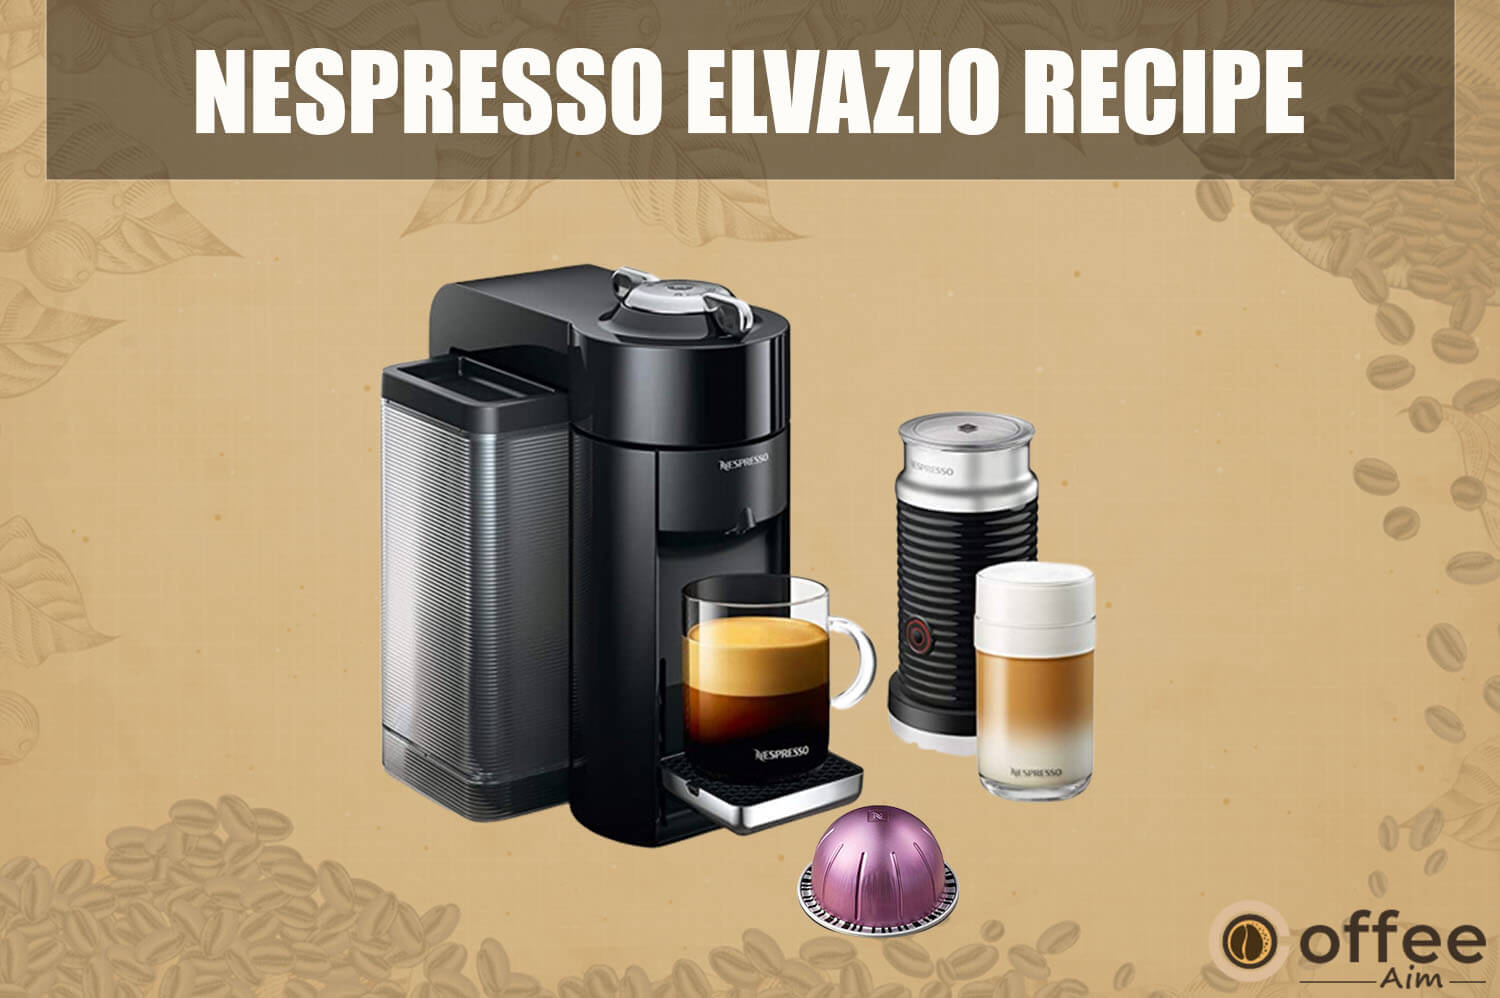 Featured image for the article "Nespresso Elvazio Recipe"